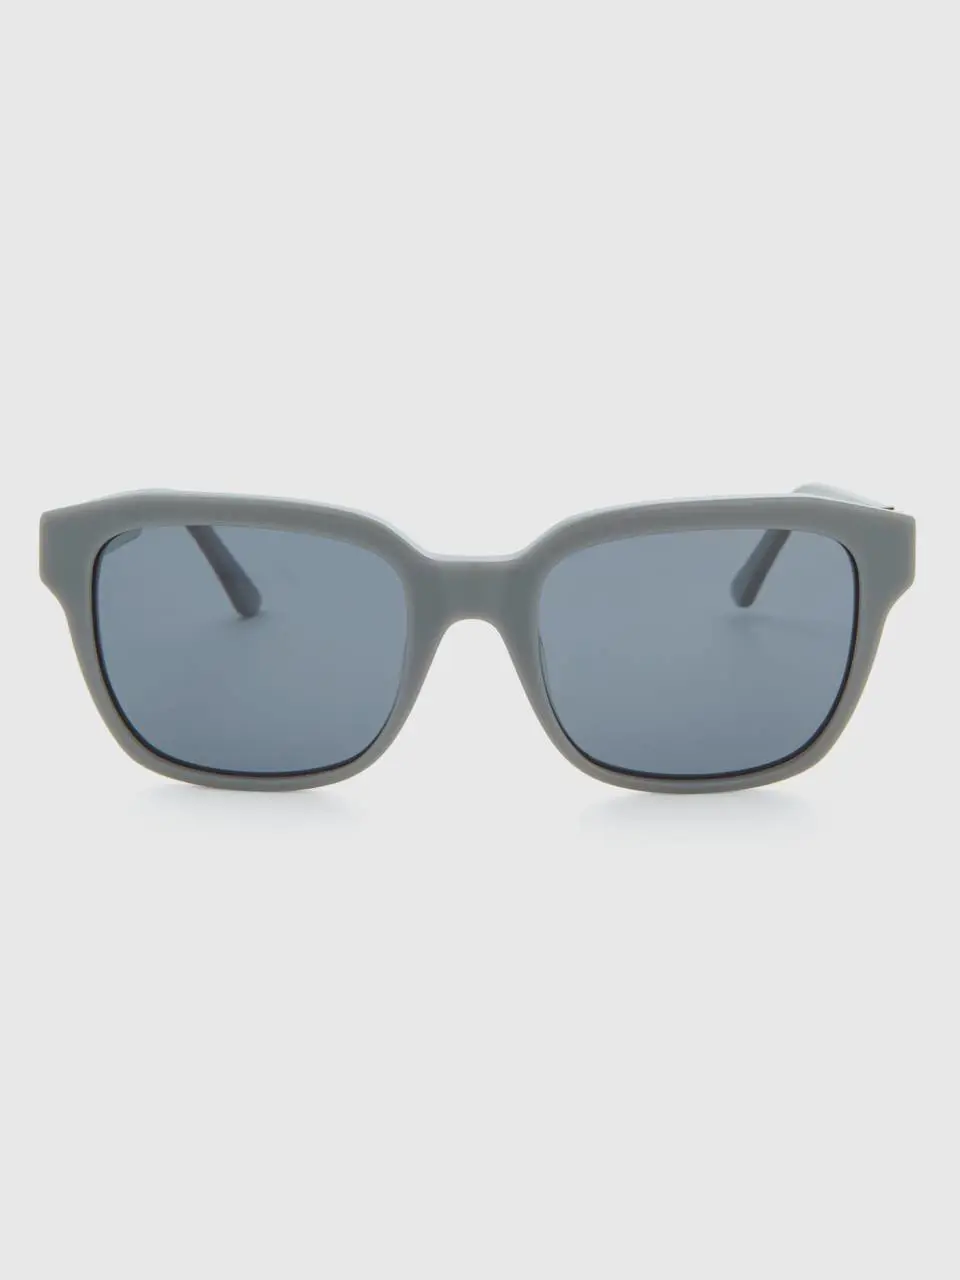 Benetton gray sunglasses with logo. 1